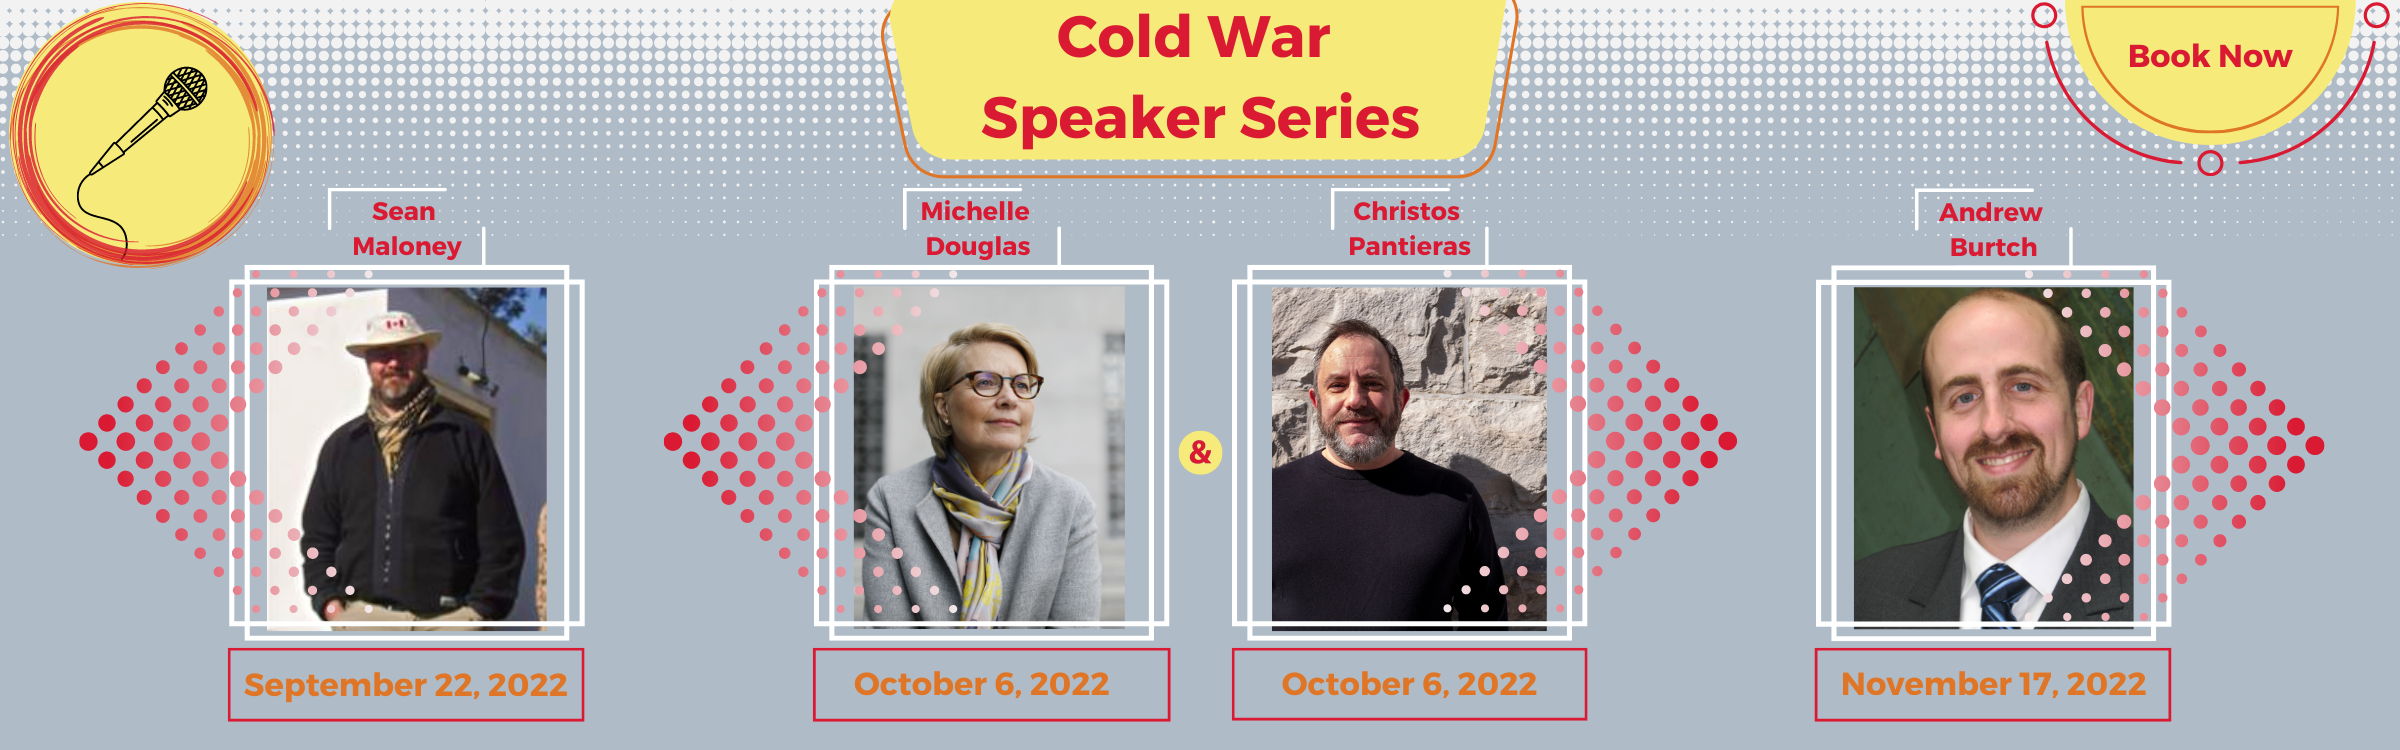 2022 Cold War Speaker Series banner